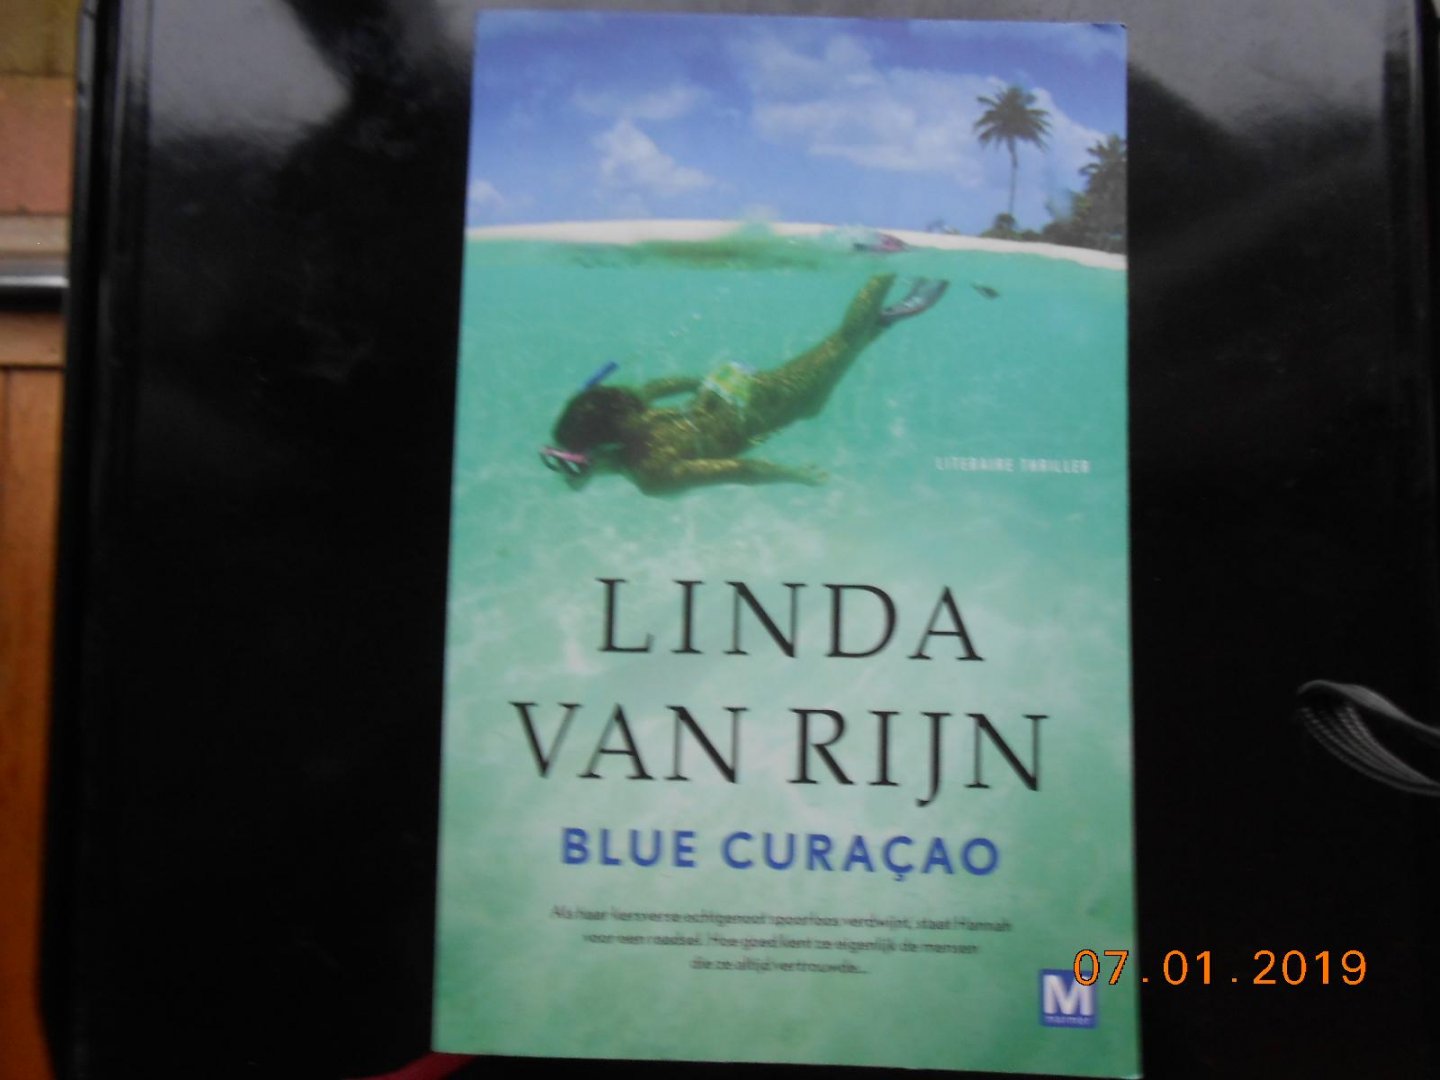 Rijn, Linda van - Blue Curacao